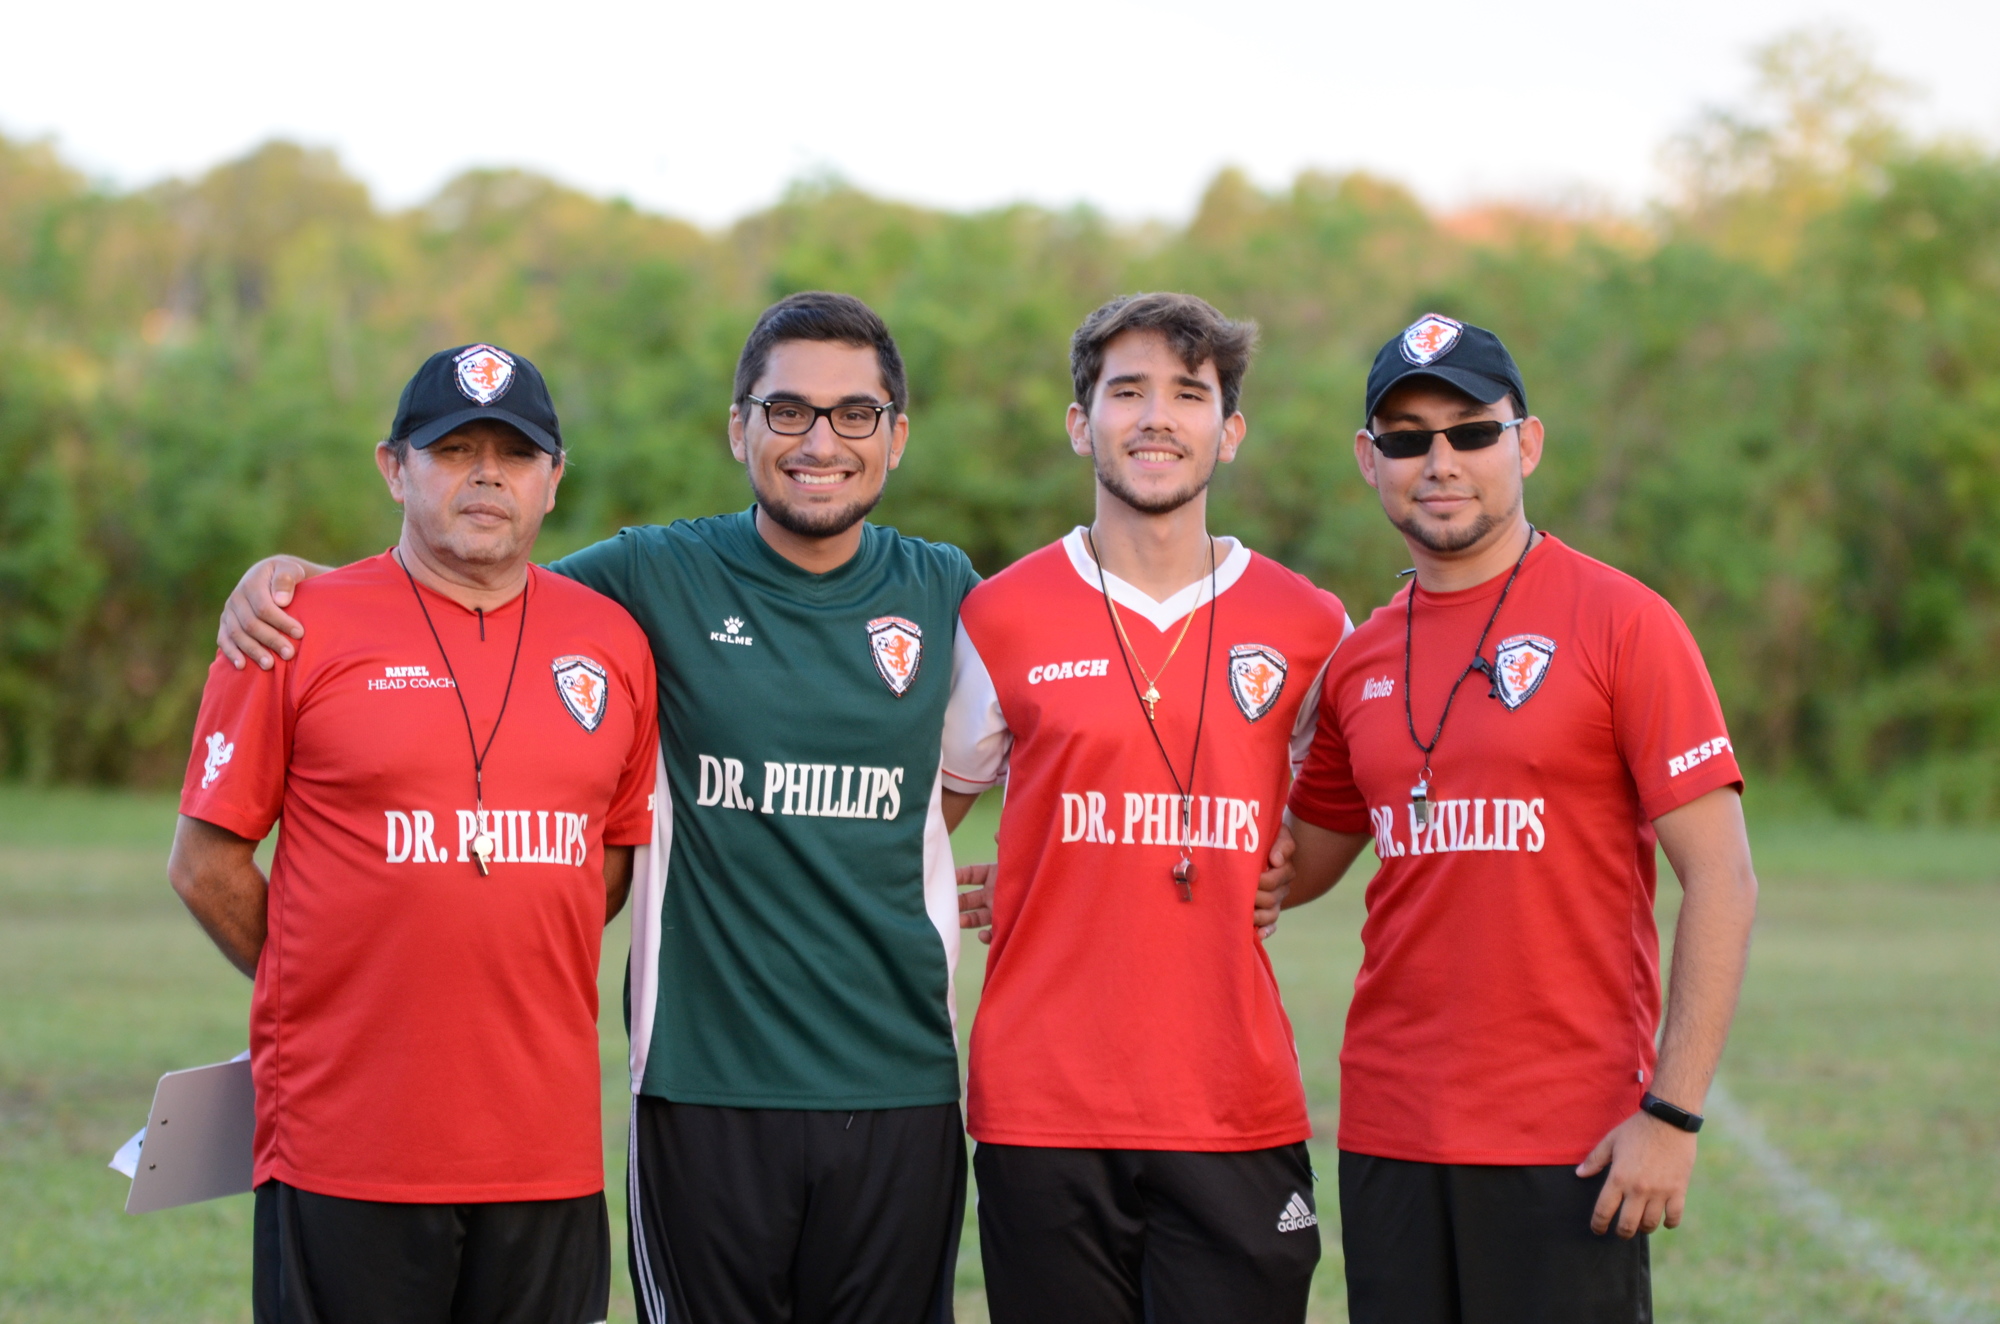 Dr. Phillips Soccer Club coaches Rafael Navarro, left, Eduardo Martinez, Gonzalo Sepulveda and Nicolas Navarro all work to create a family-atmosphere within the club.